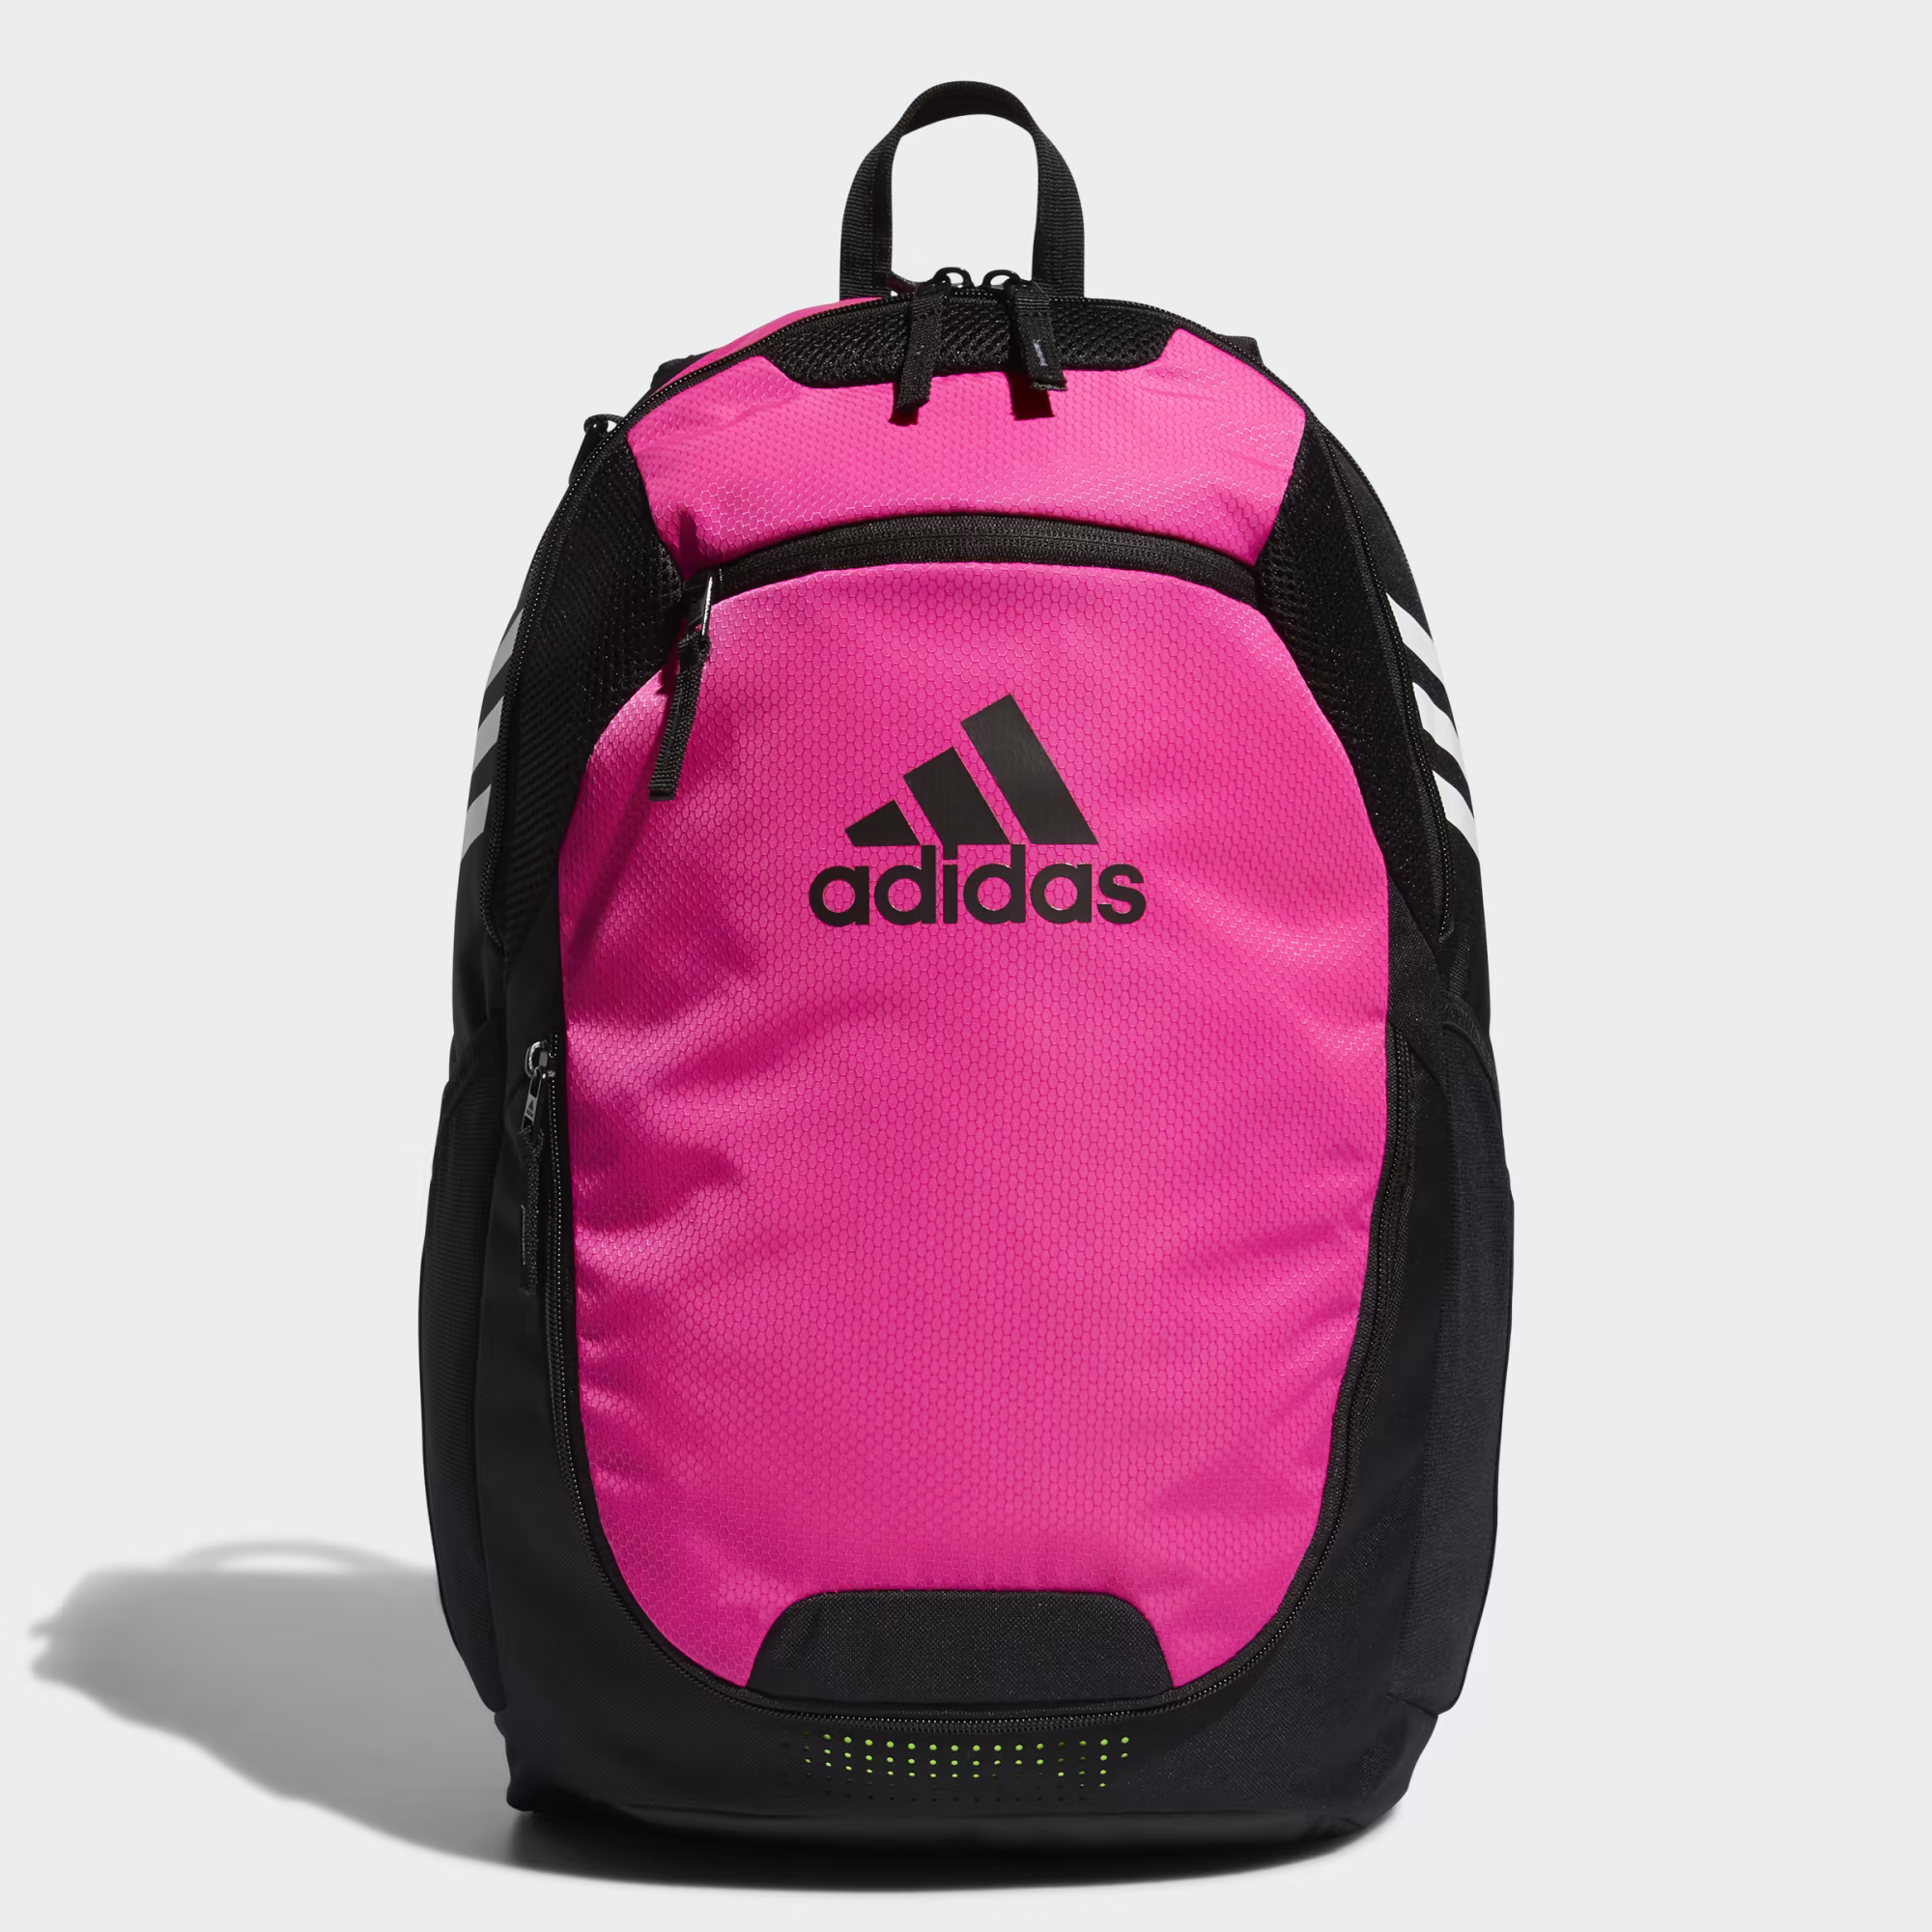 Adidas Stadium 3 Backpack - Pink